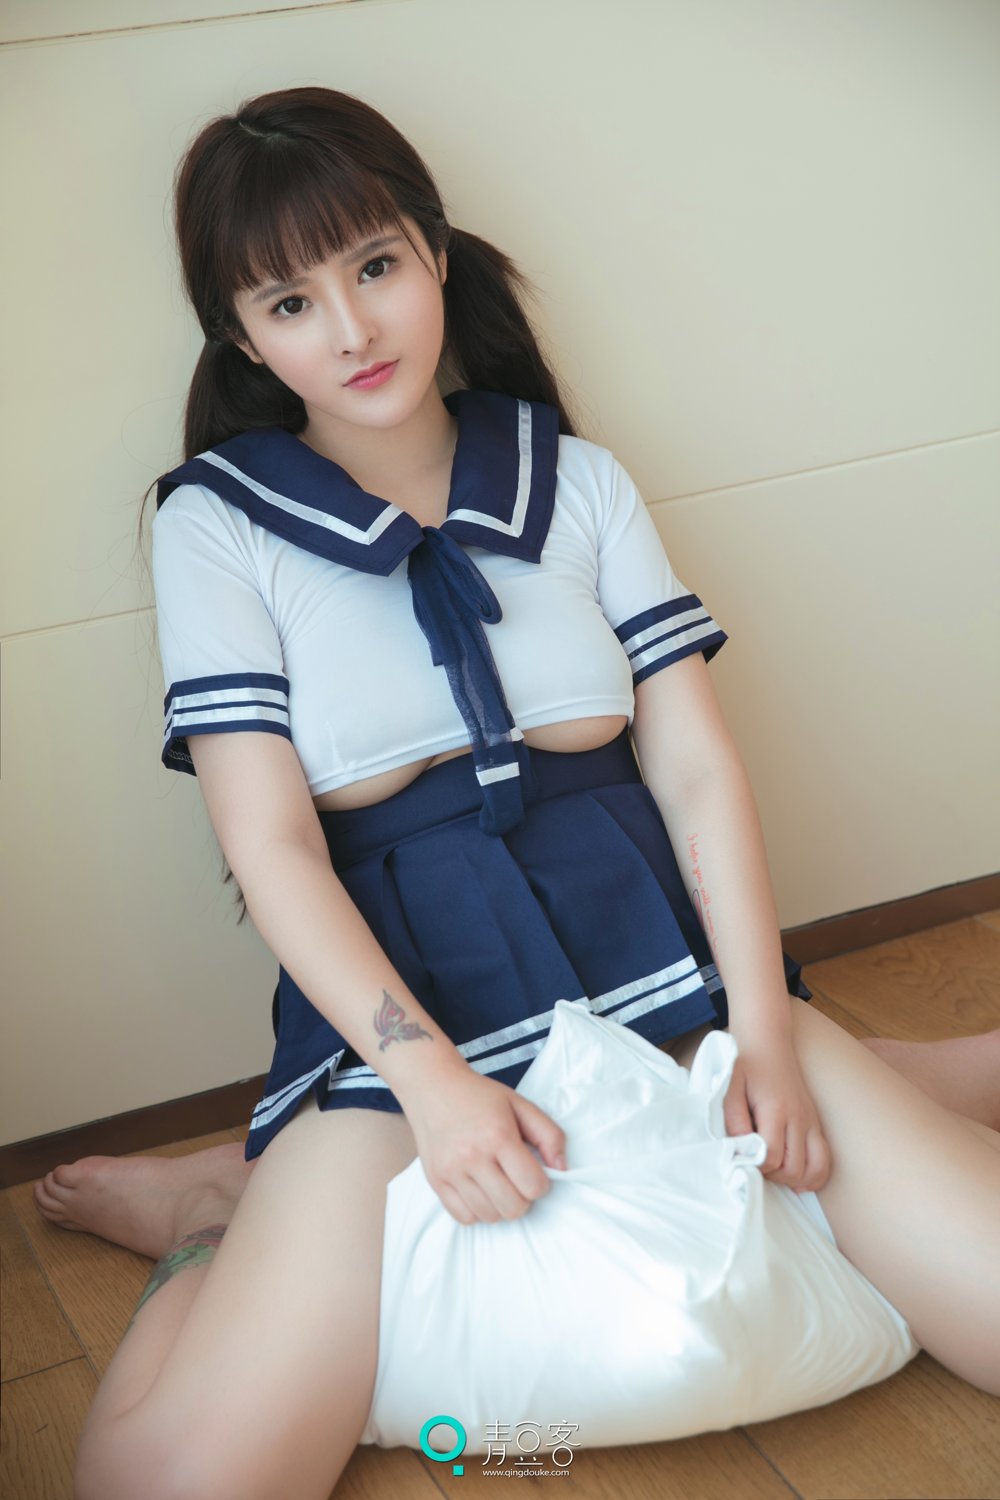 QingDouKe - Student Uniform and Bra